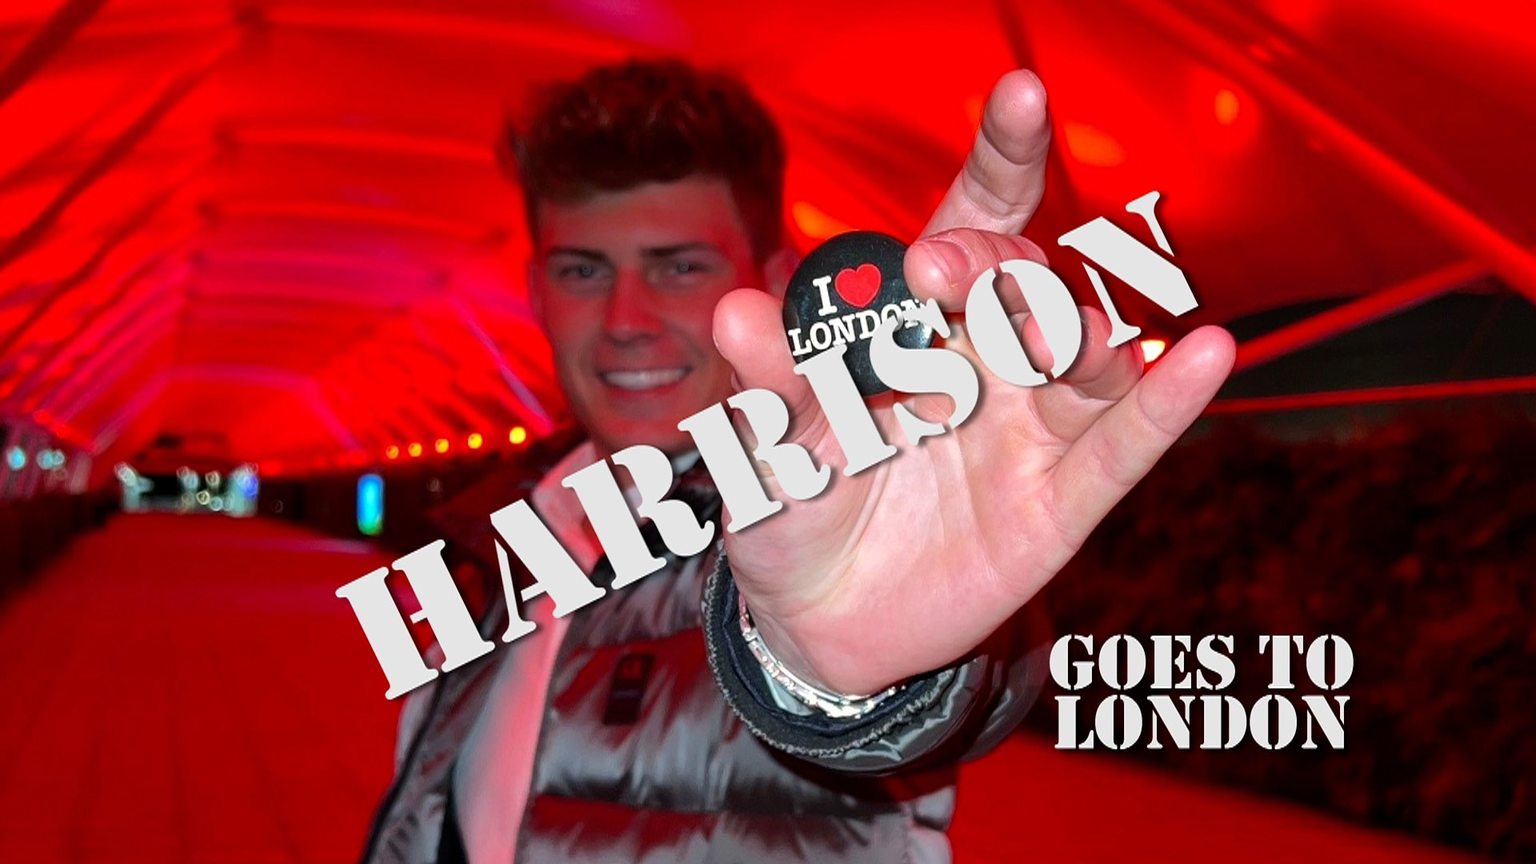 Harrison Goes To London